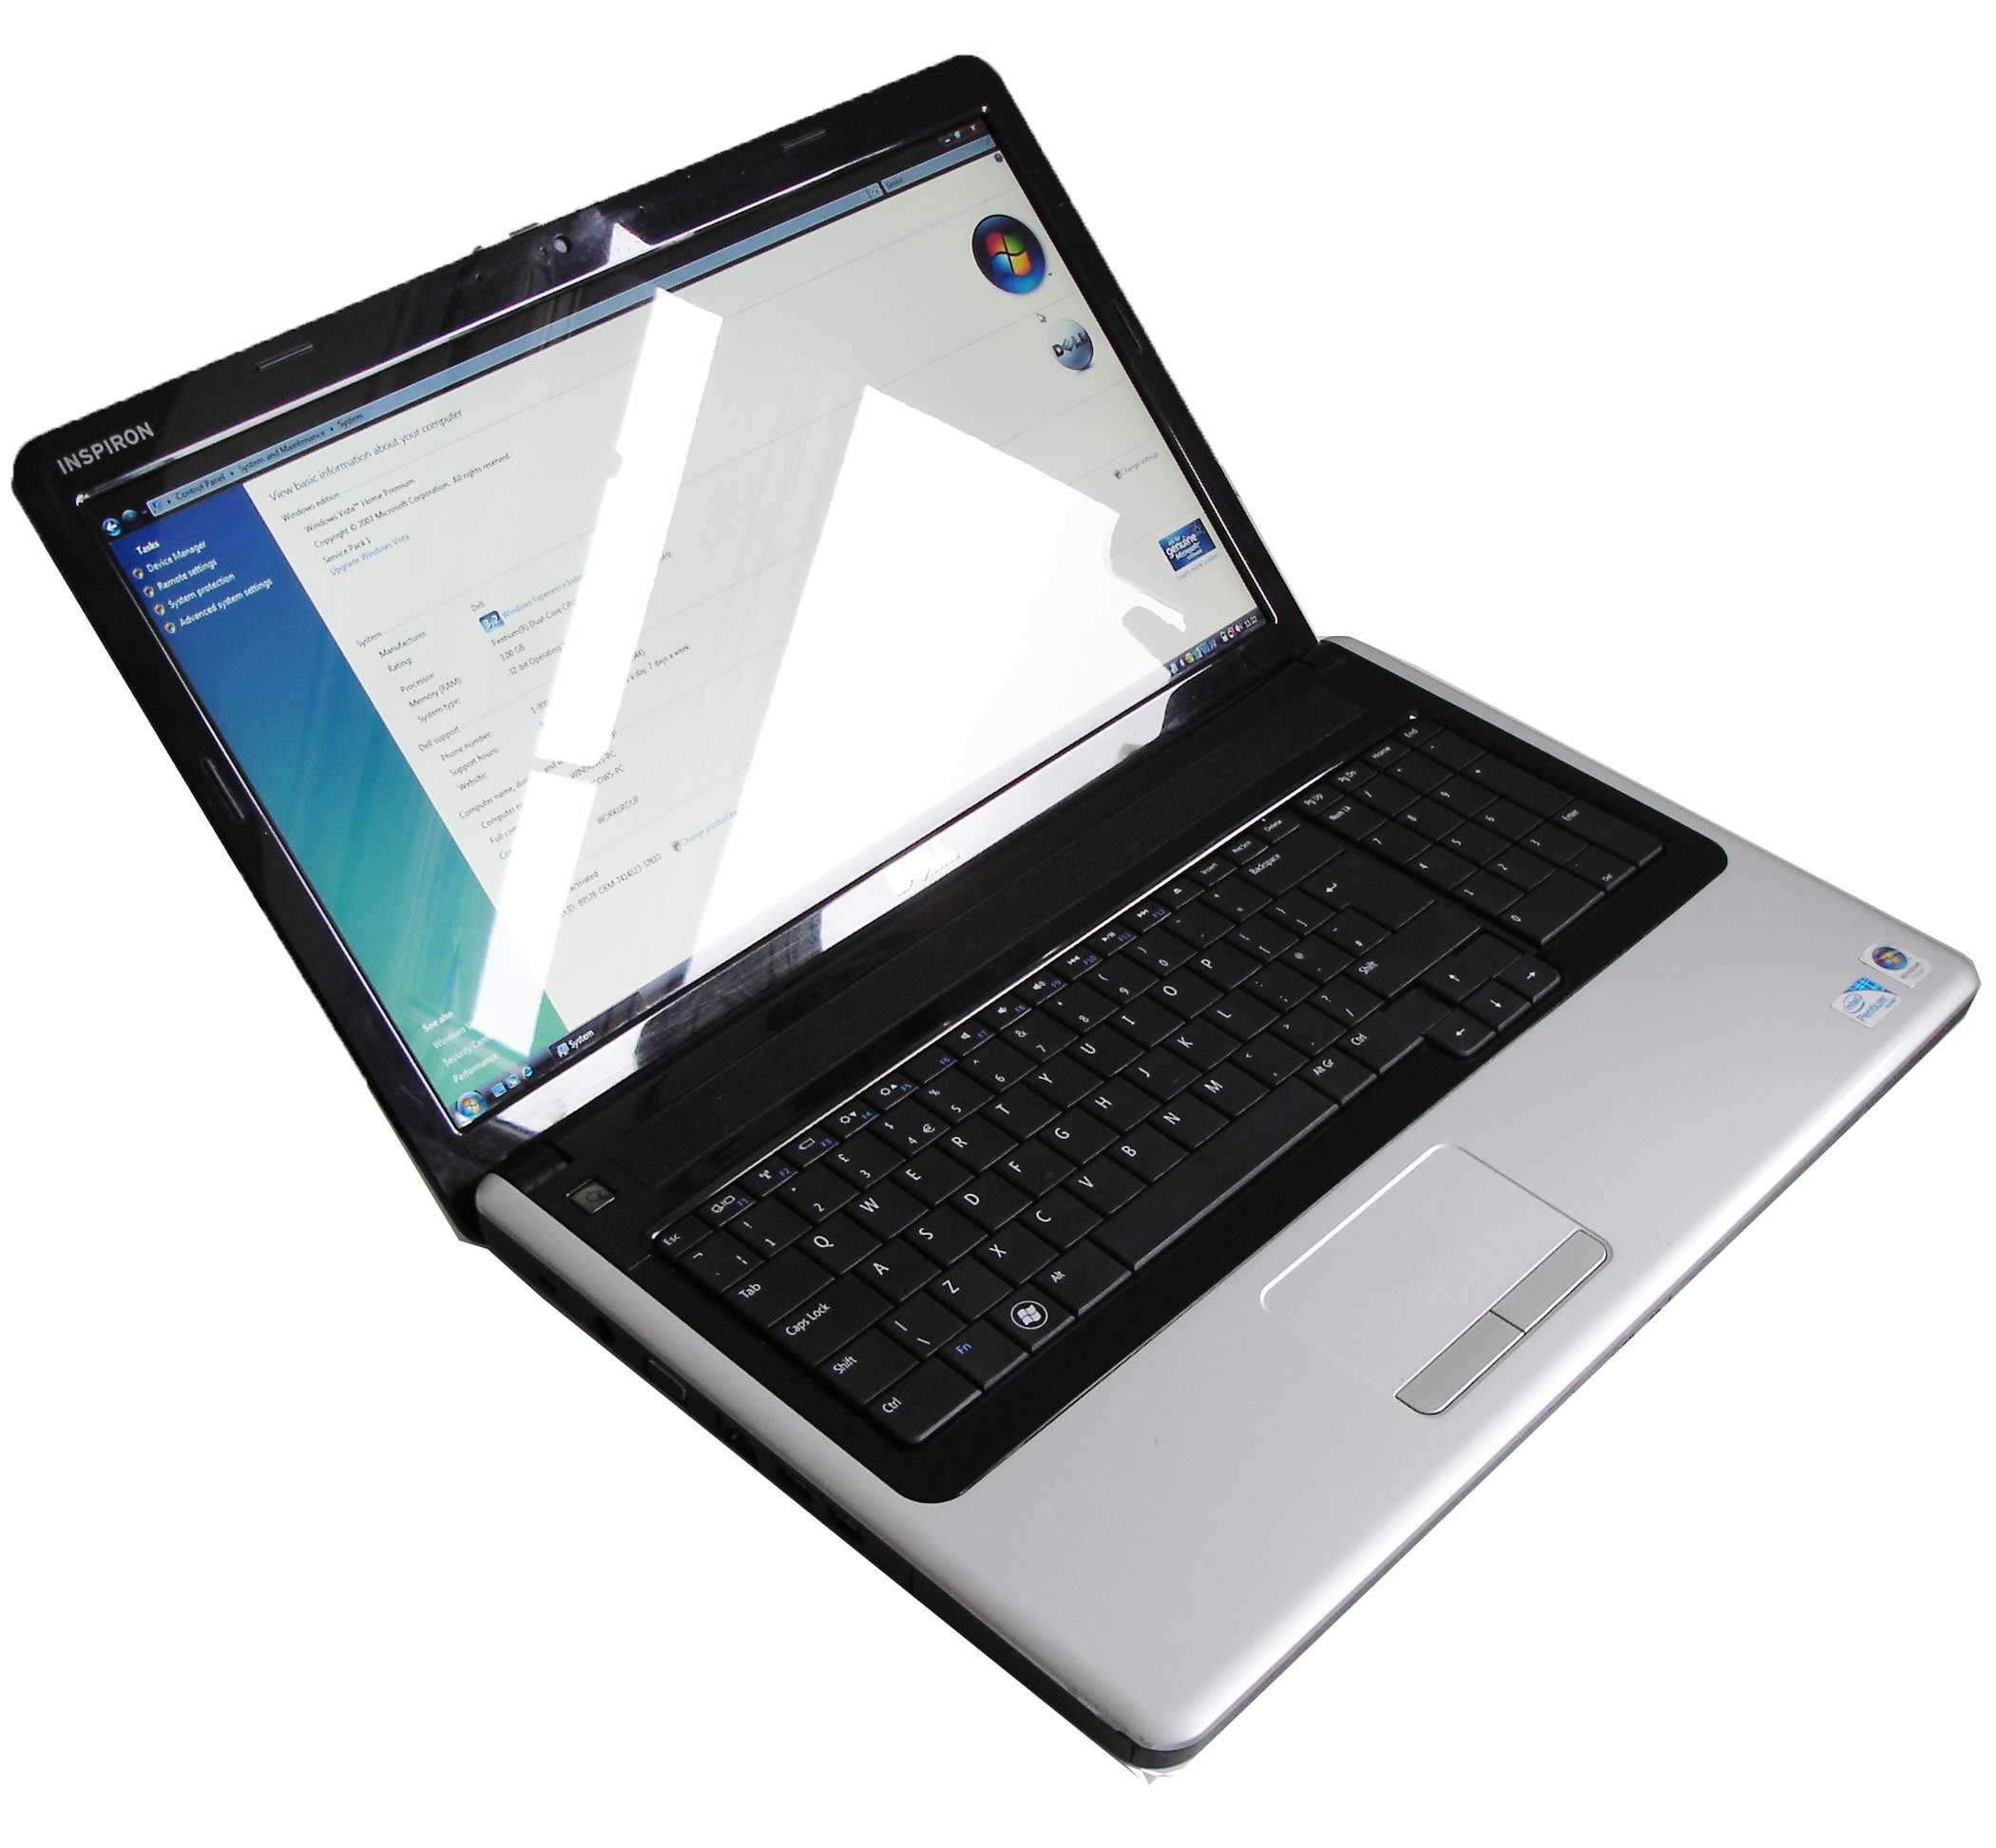 Dell Inspiron 1750 Laptop Windows Vista Home Premium 8198